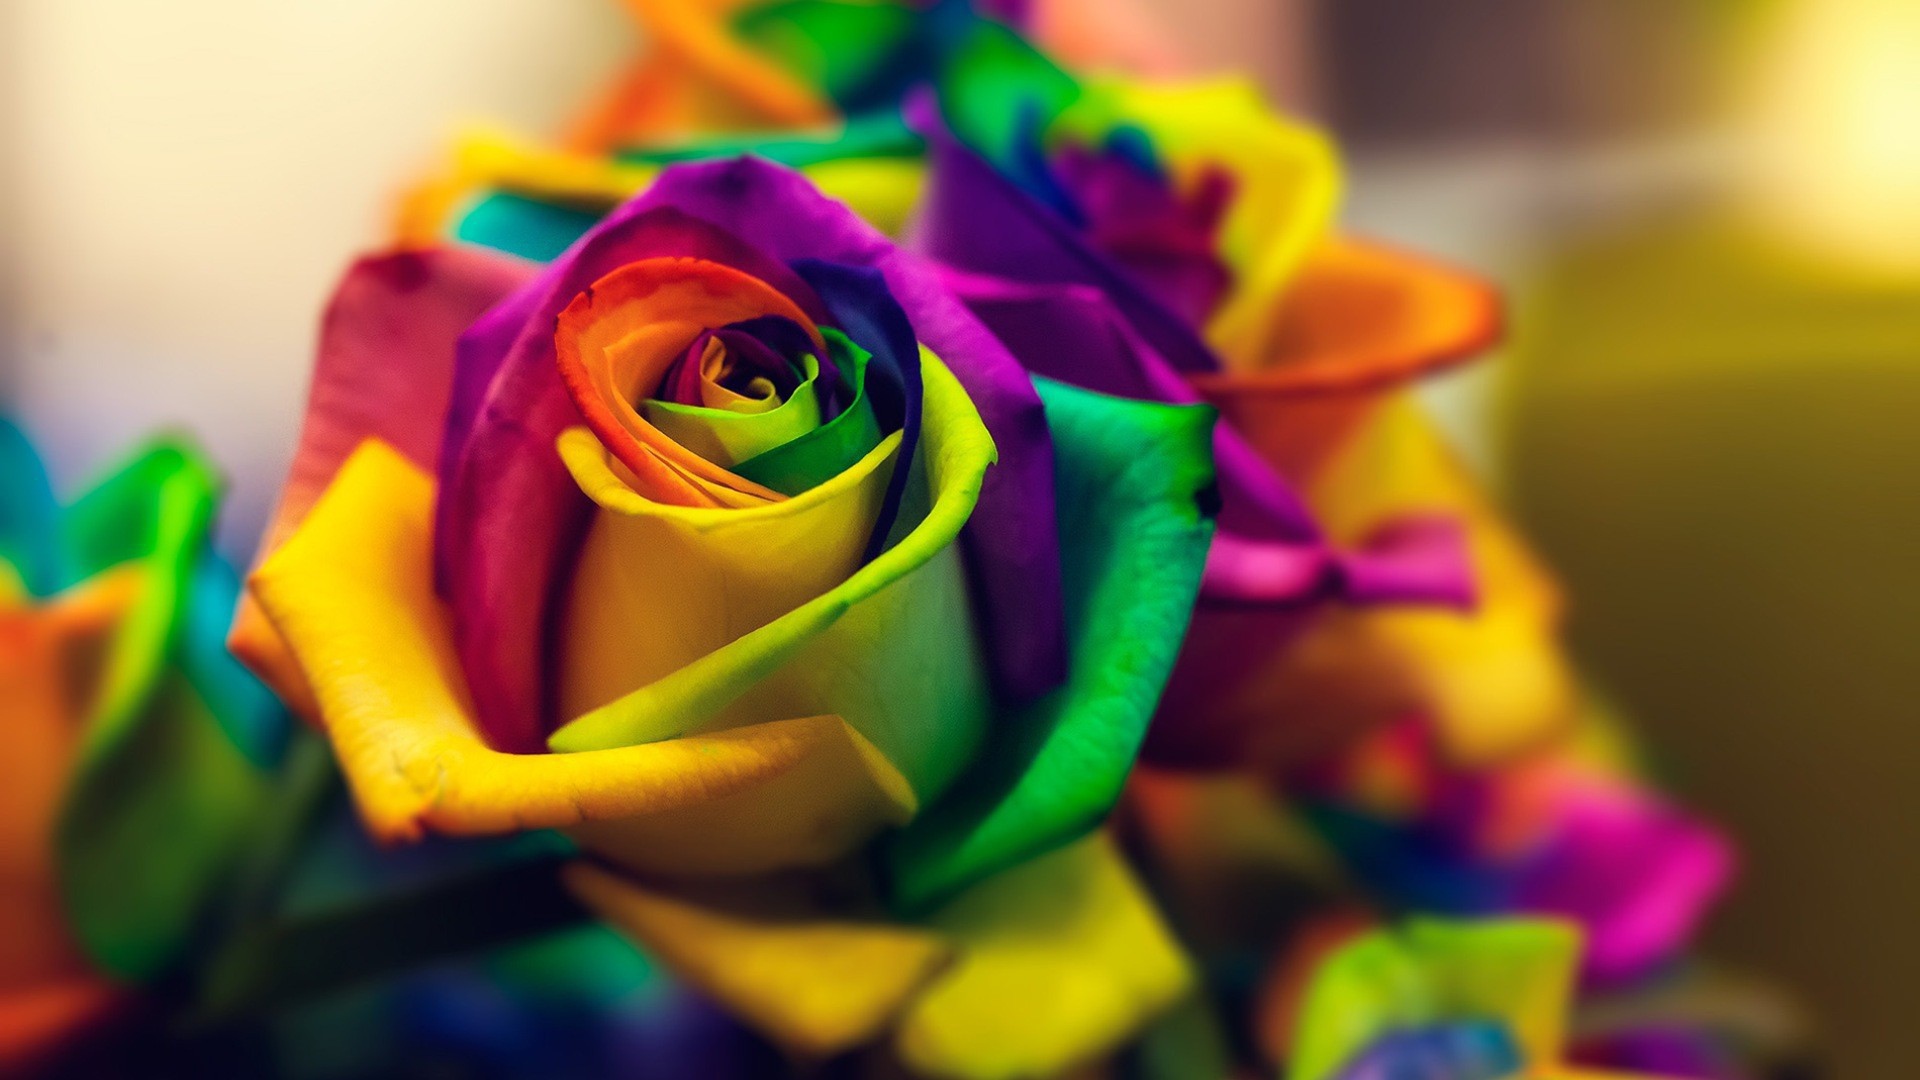 Яркая роза с лепестками разного цвета